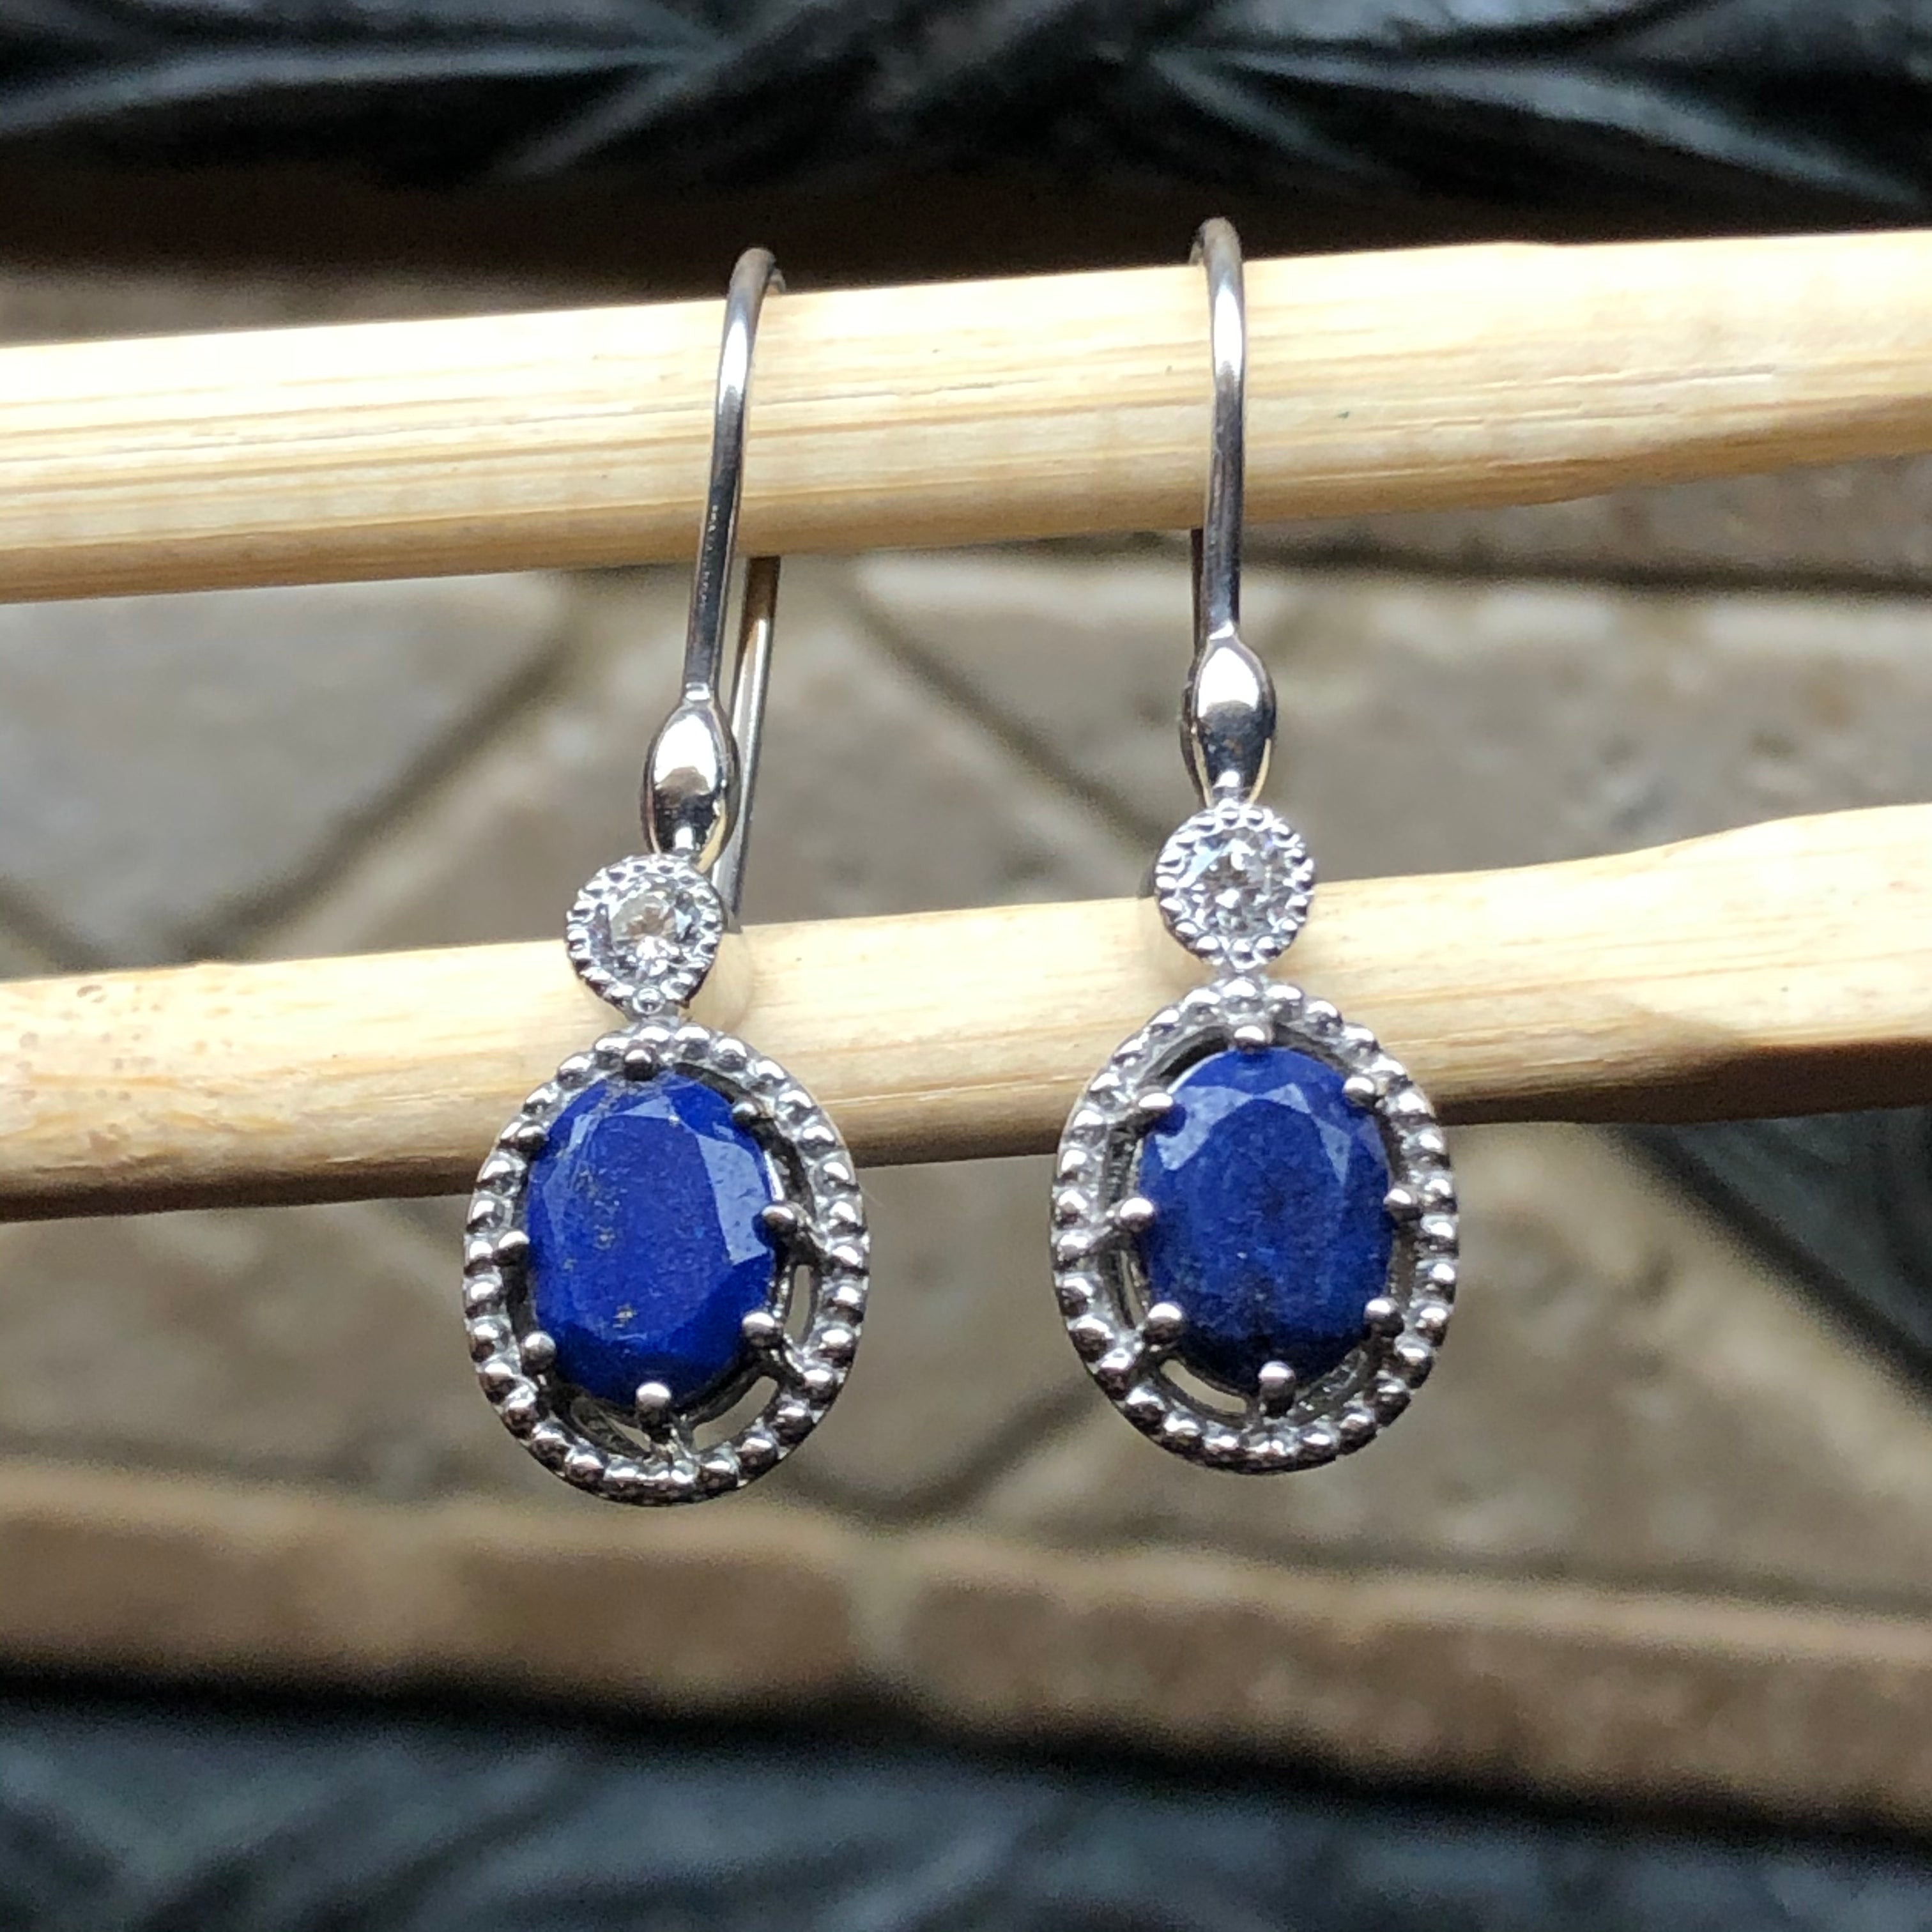 Genuine Blue Lapis Lazuli 925 Solid Sterling Silver Earrings 30mm - Natural Rocks by Kala